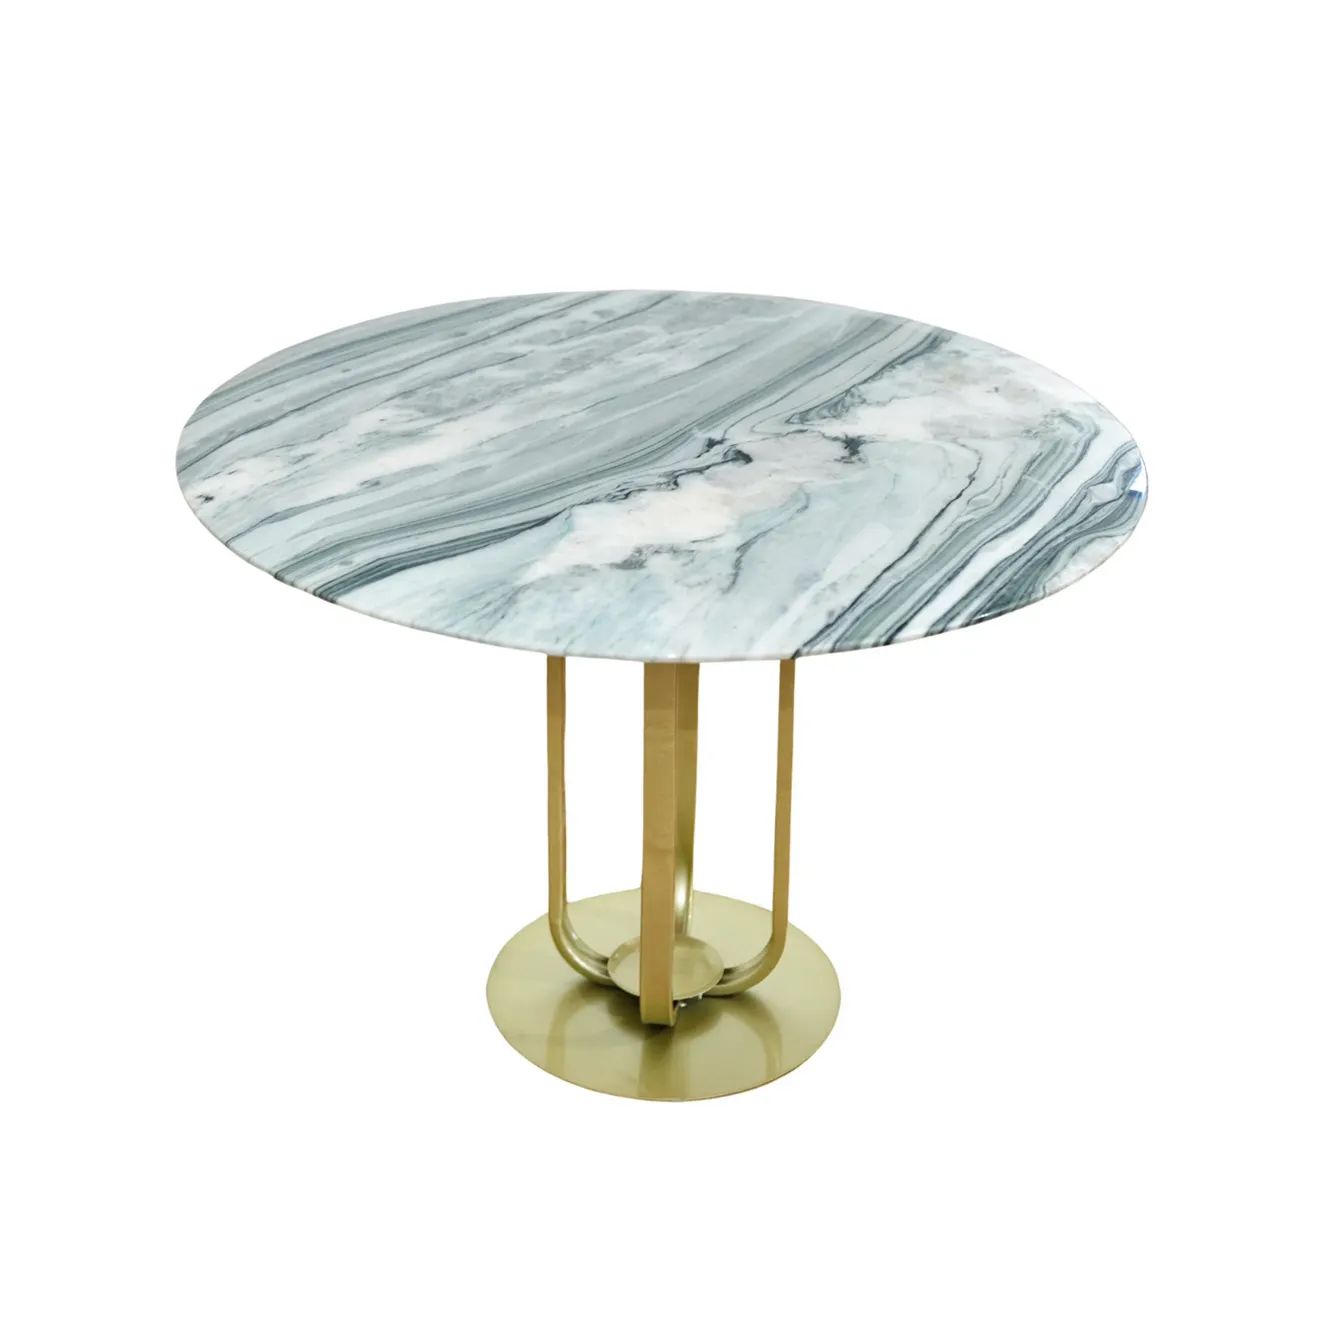 Round decorative table